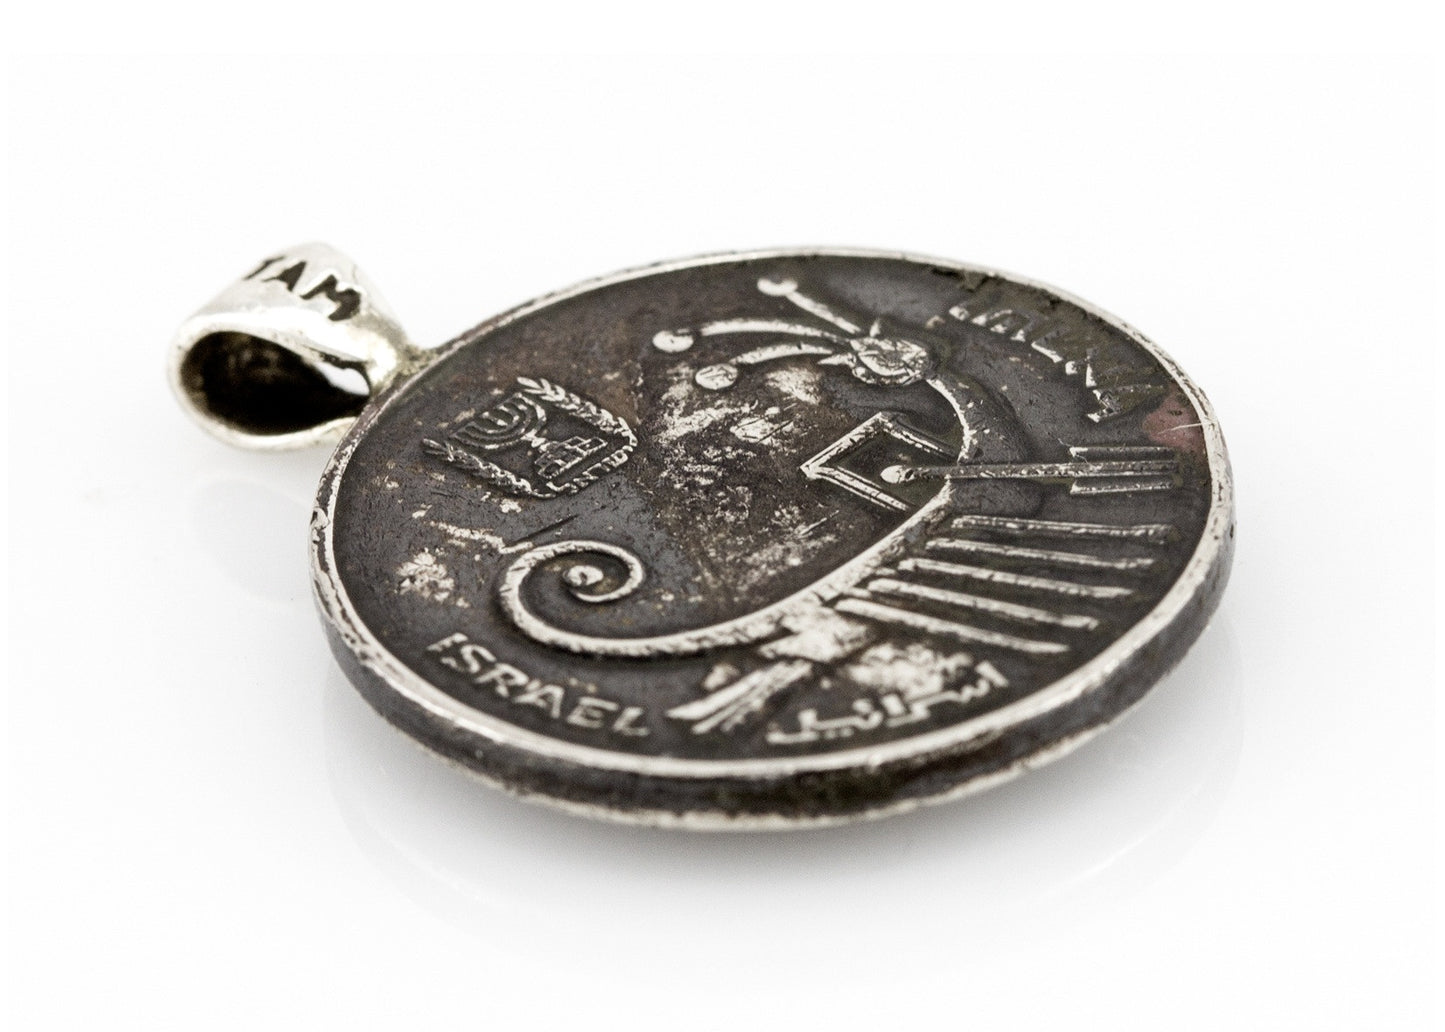 Virgo Medallion on Old 10 Sheqel Coin of Israel